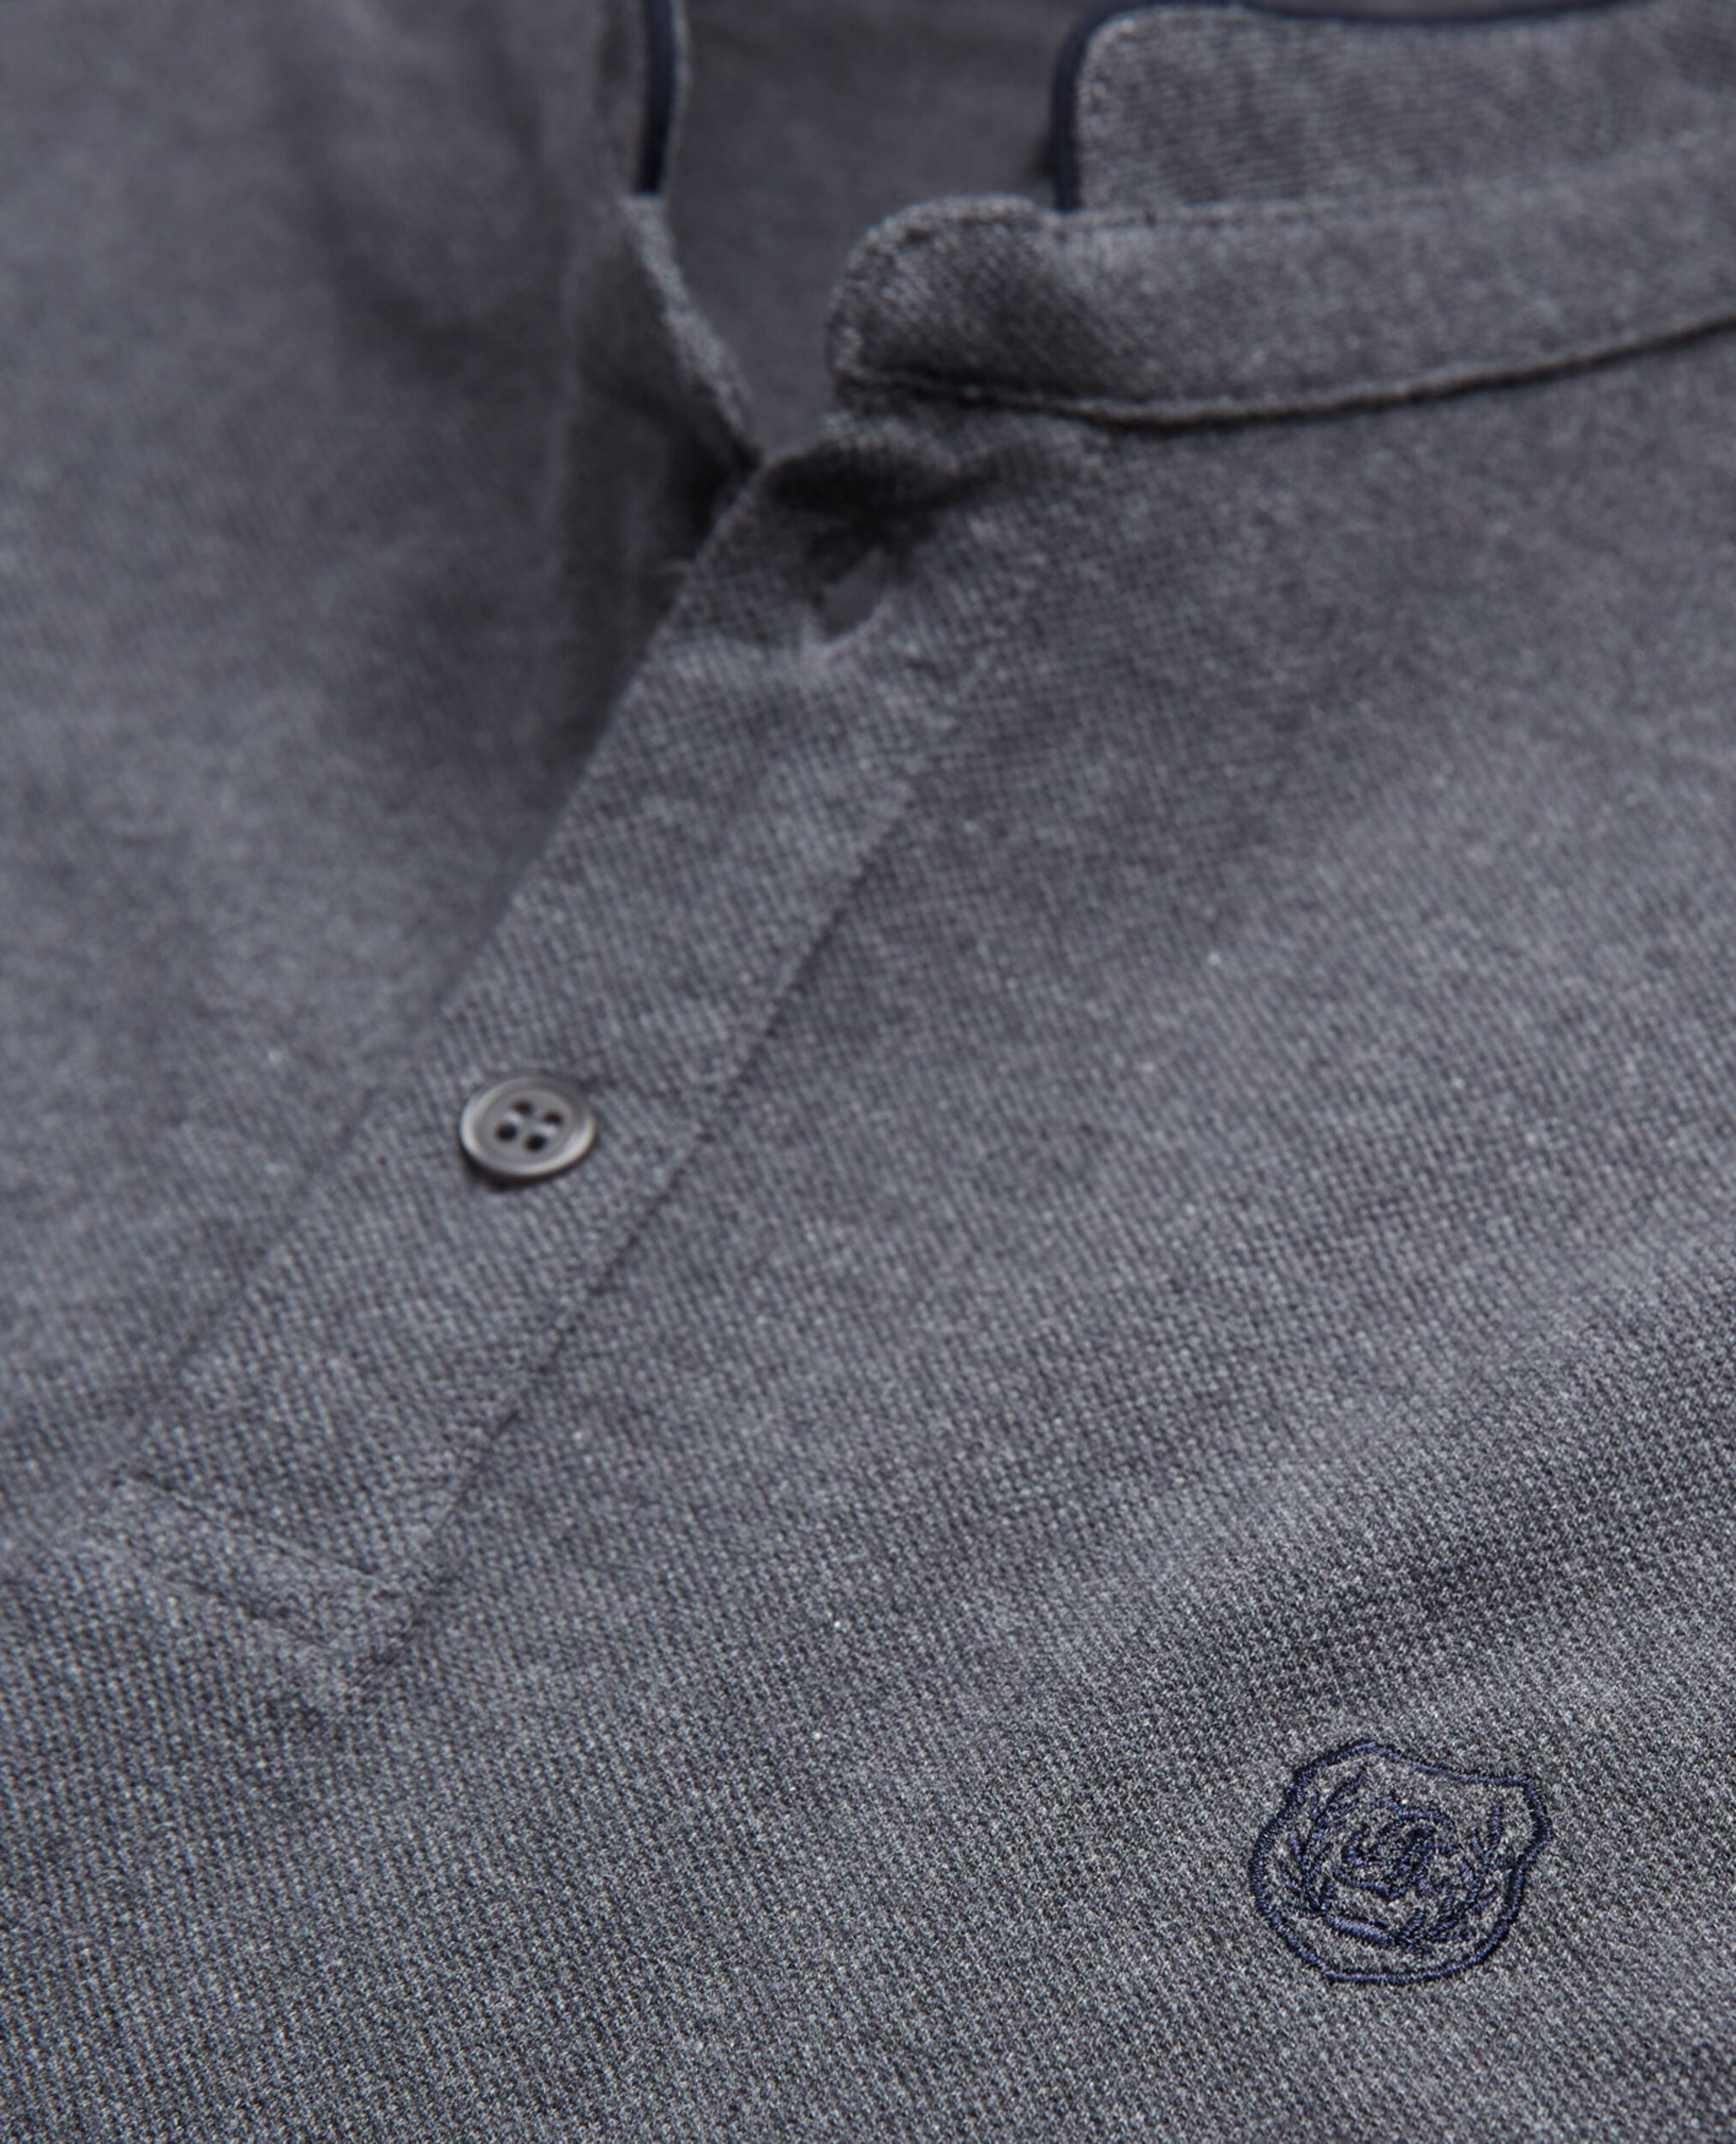 Camisa polo gris oscuro algodón Mao bordado, GREY-NAVY, hi-res image number null